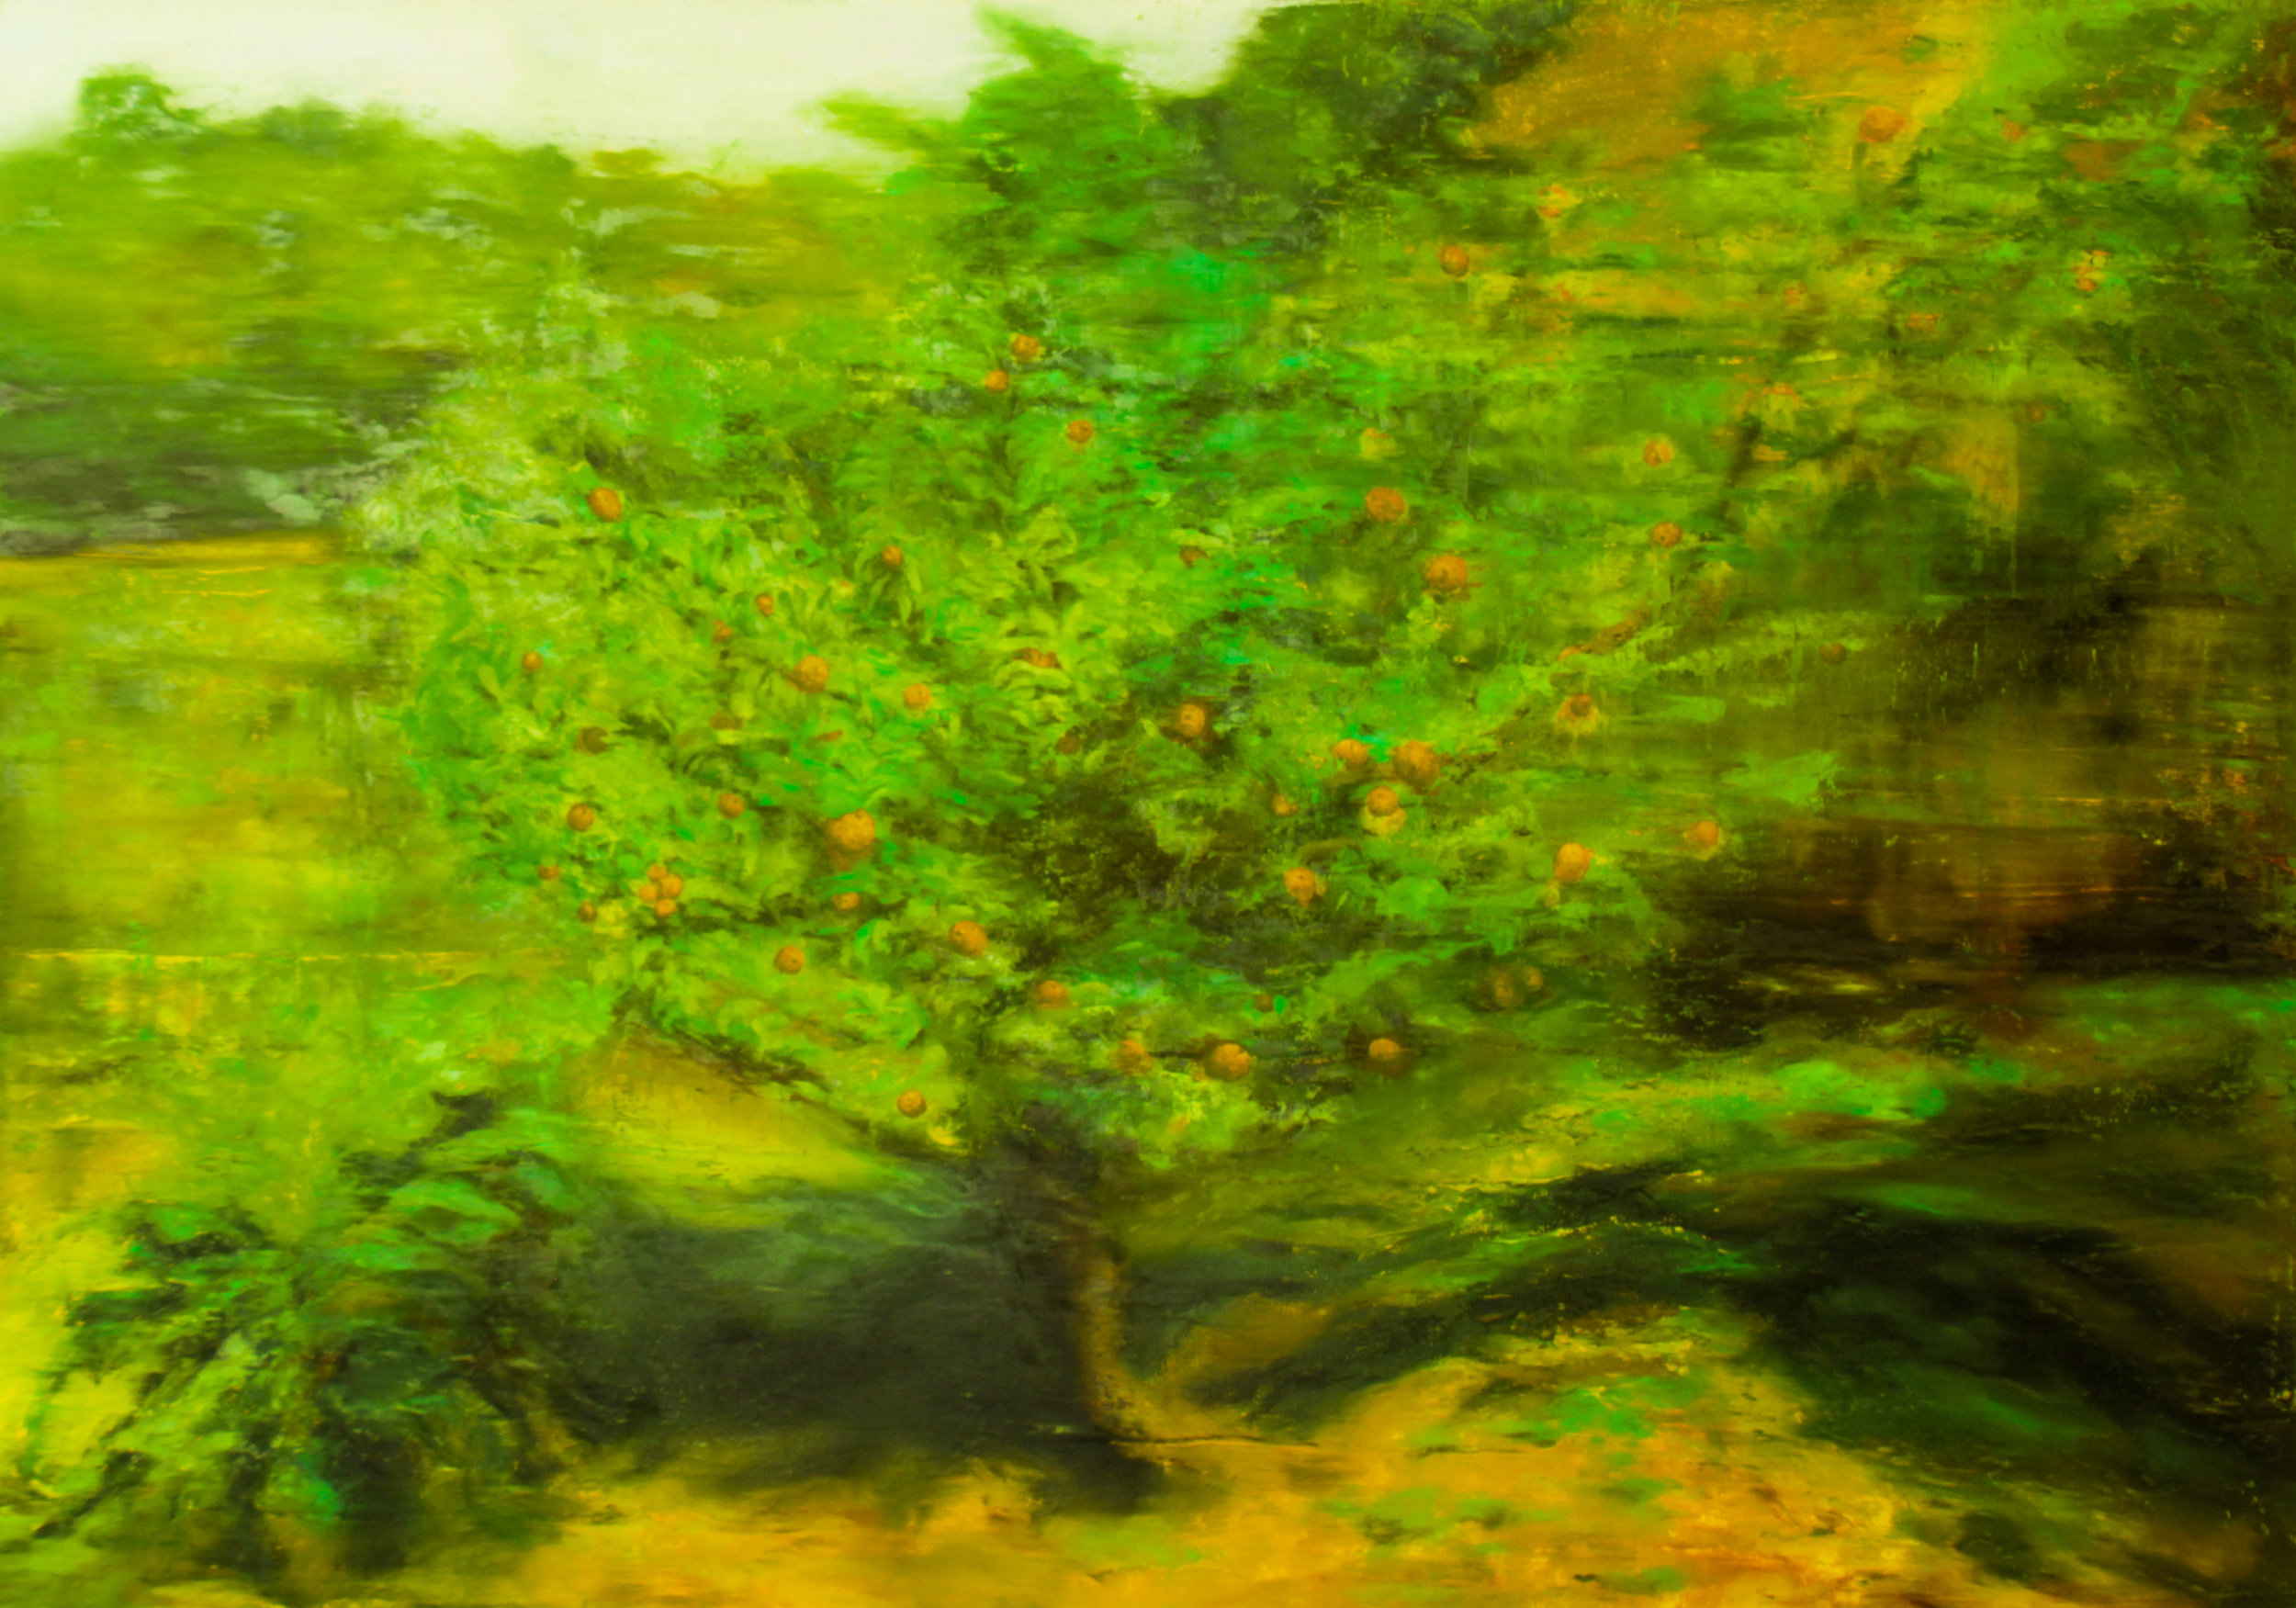  55” x 78” Oil on Canvas 